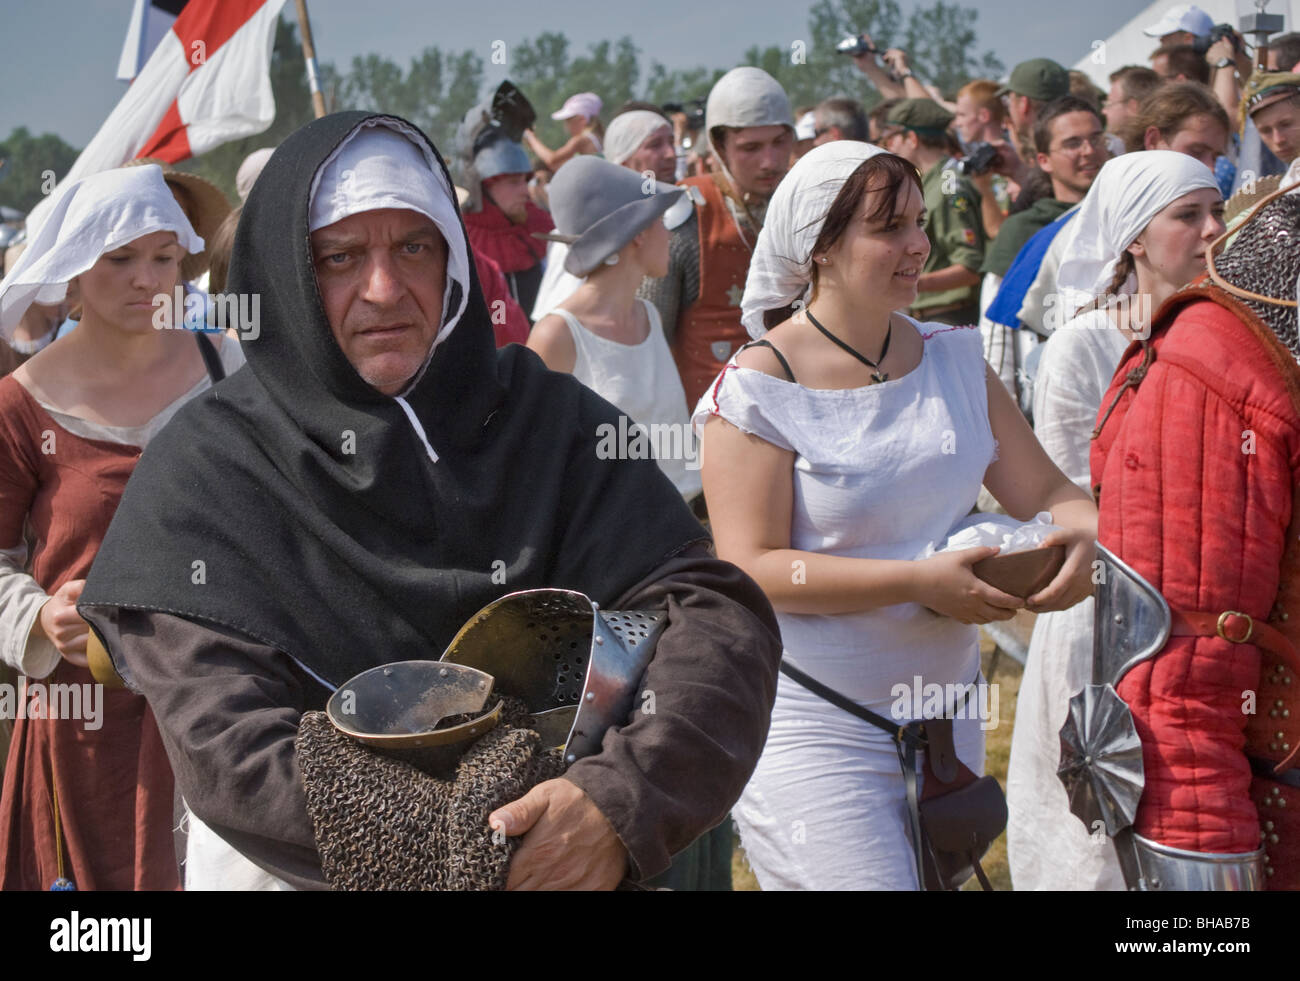 Reenactors leaving battlefield after recreating 1410 Battle of Grunwald Warminsko-Mazurskie, Poland Stock Photo